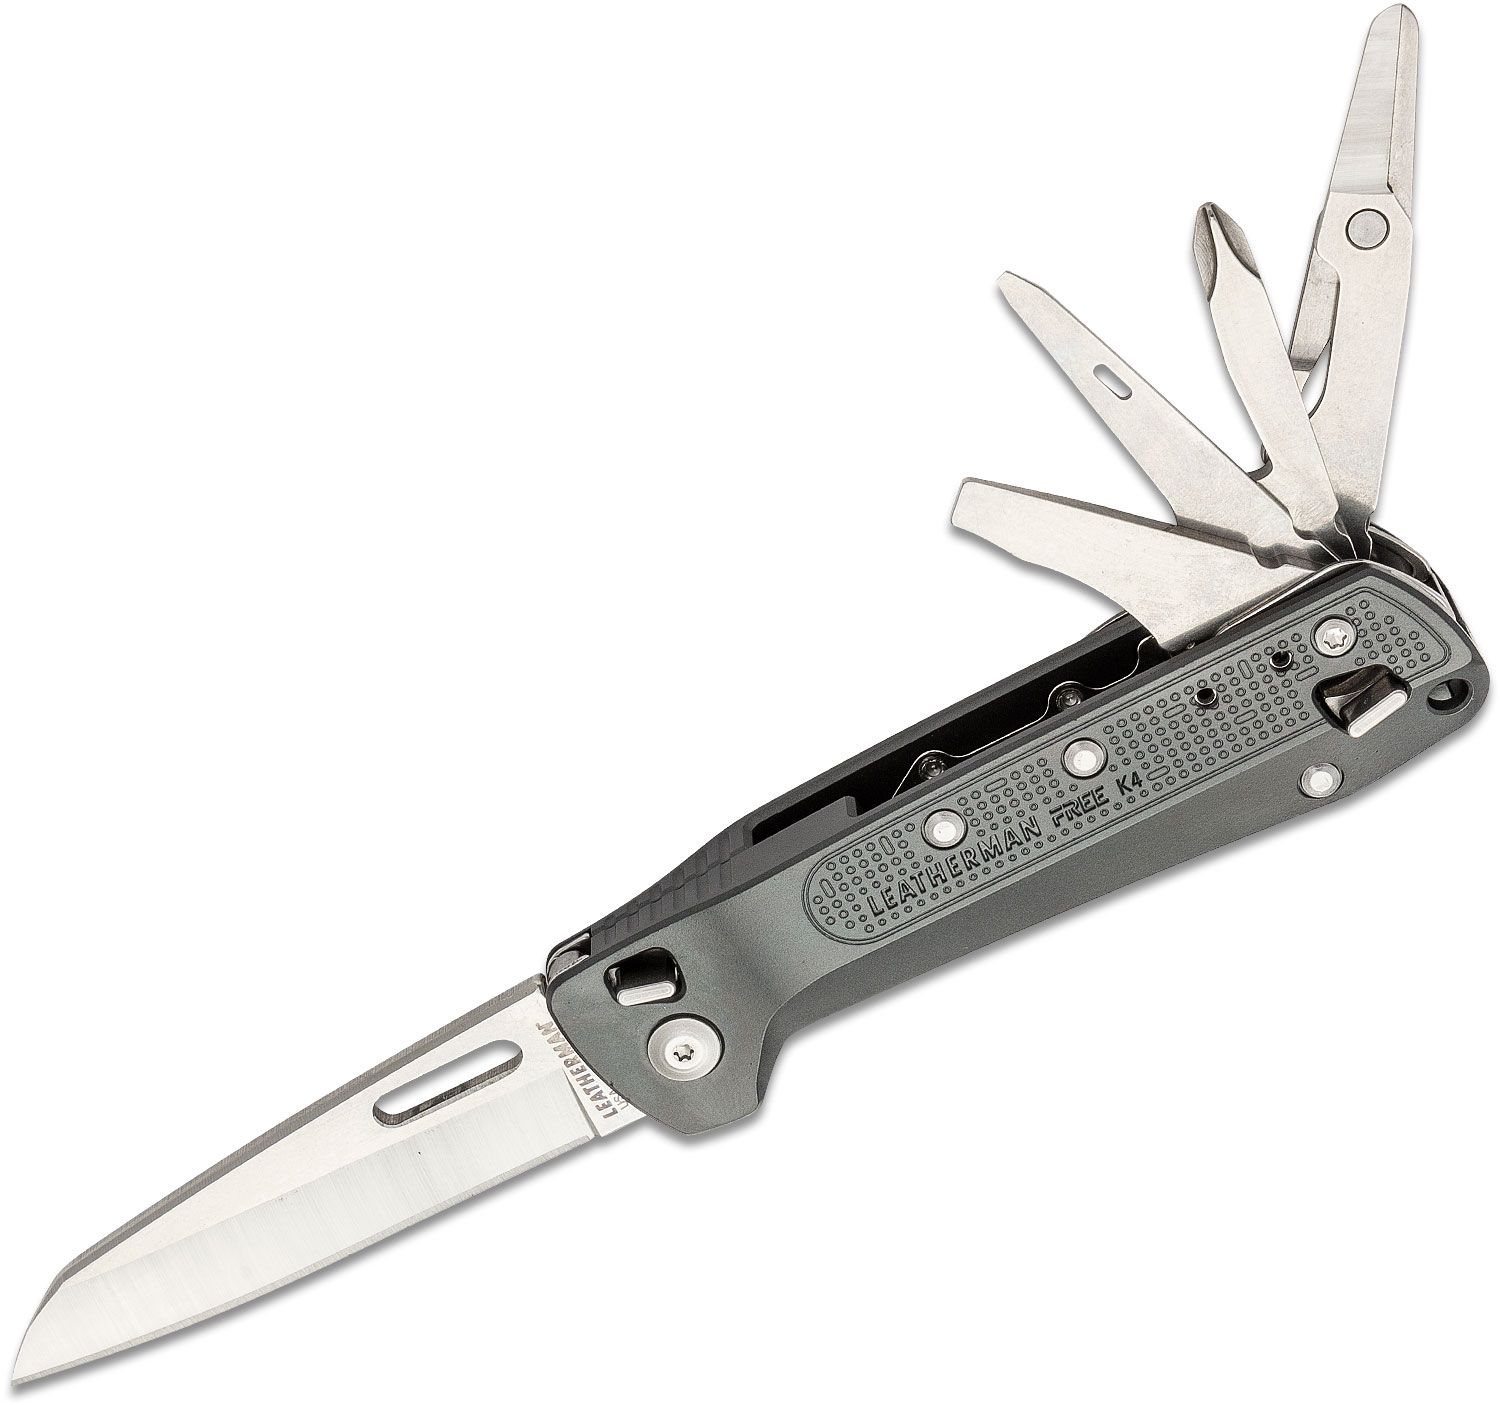 Leatherman FREE™ K4 Pocket Size Multi-Purpose Knife 3.3